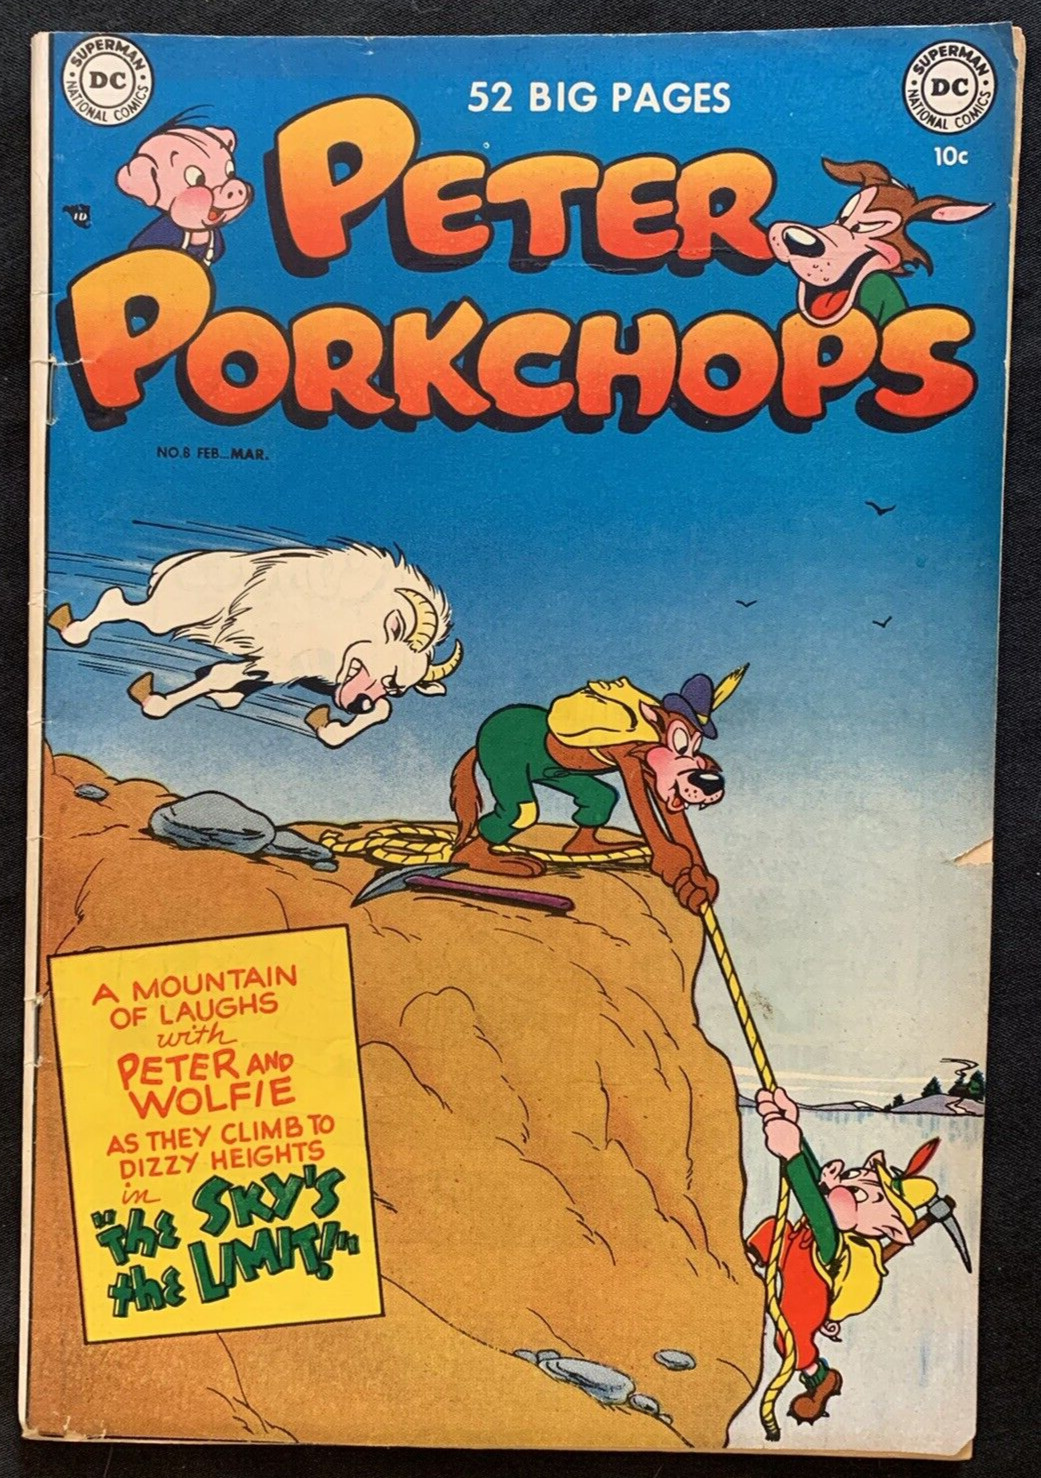 PETER PORKCHOPS #8 1951 DC Comics 52 Pages Estate Sale and Original Owner